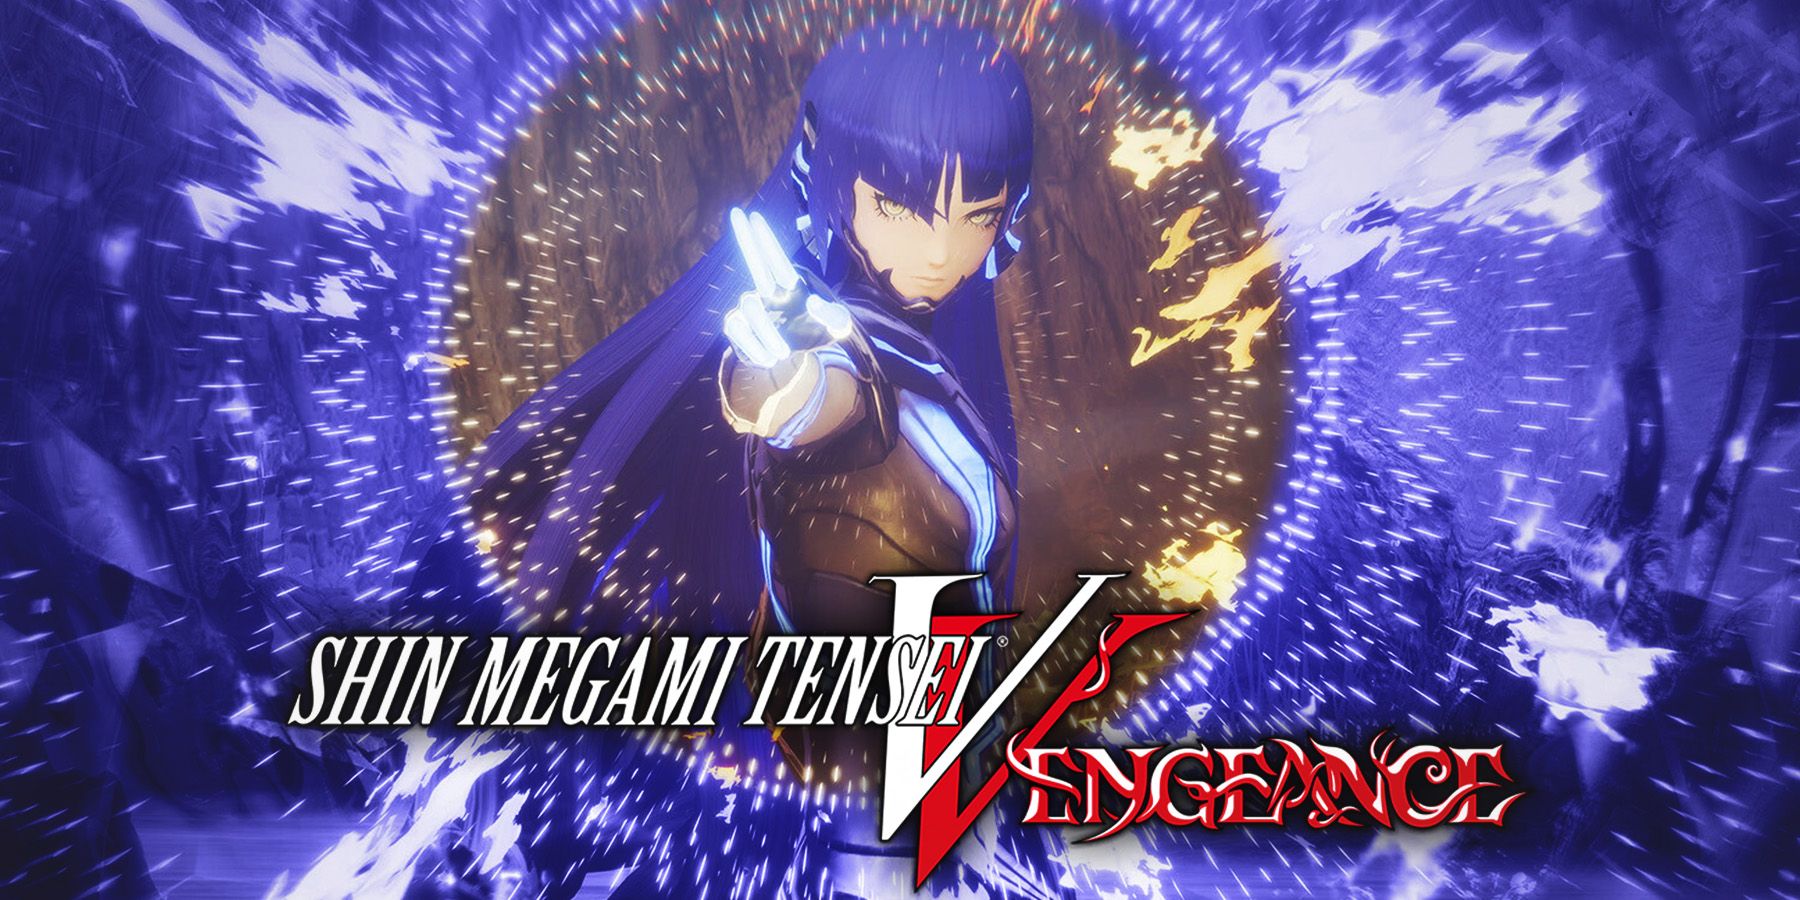 microsoft, shin megami tensei 5: vengeance deluxe edition details revealed